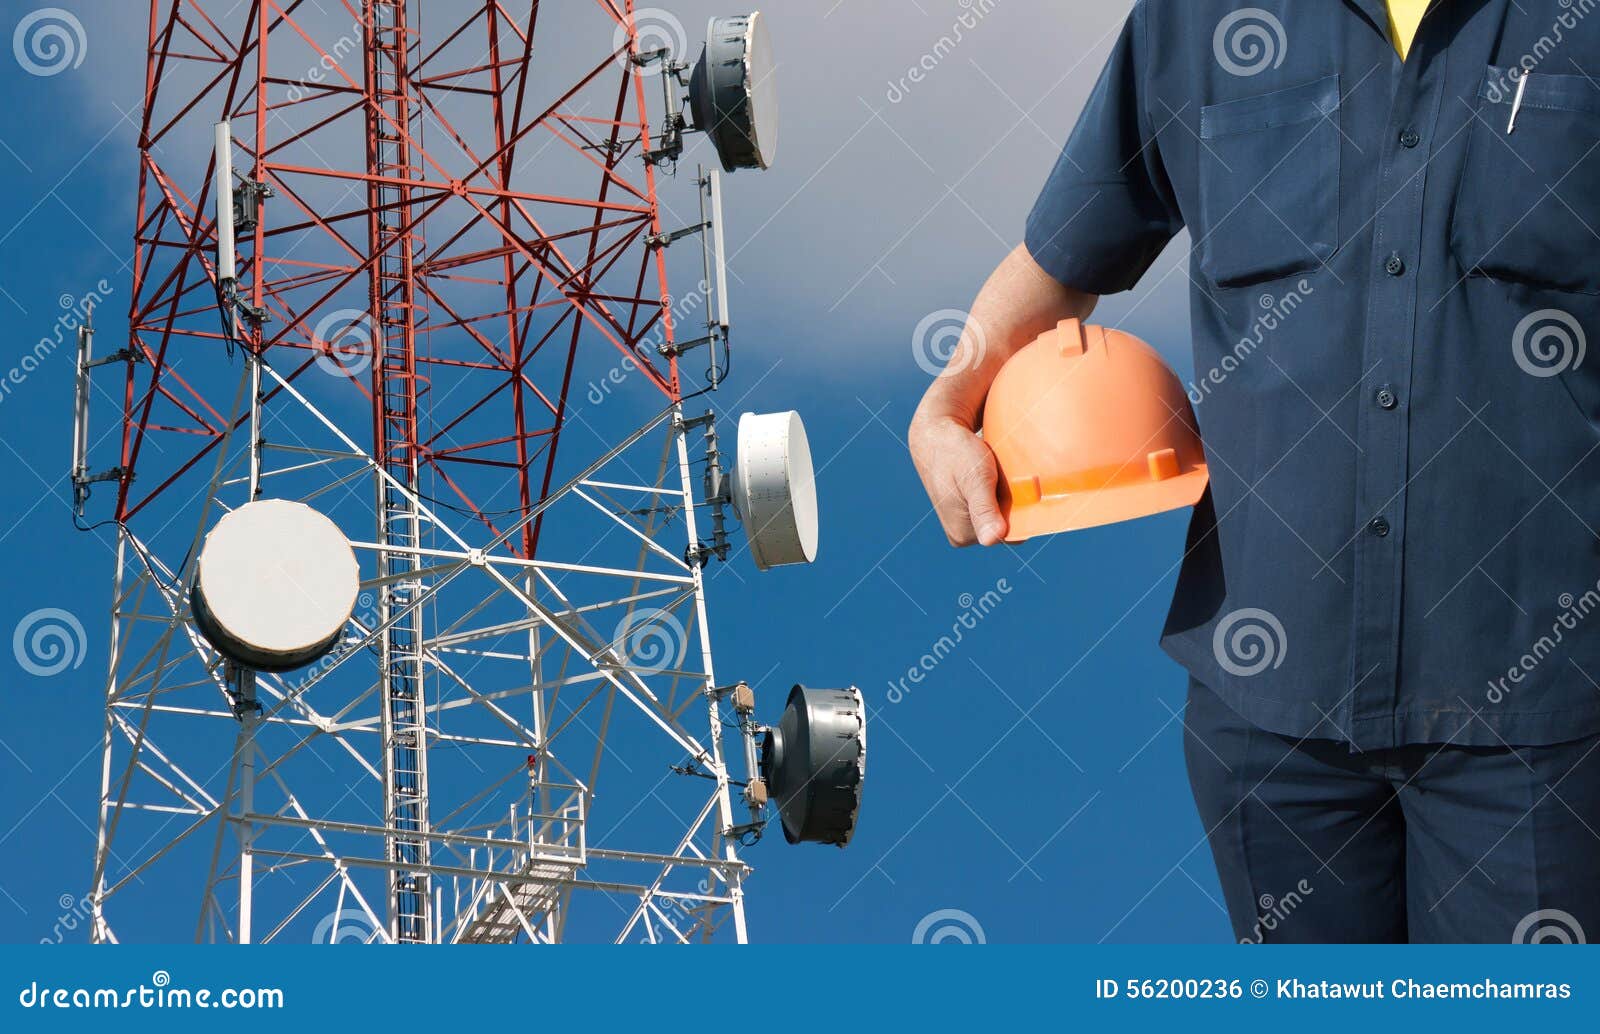 engineer holding orange helmet on telecommunications tower